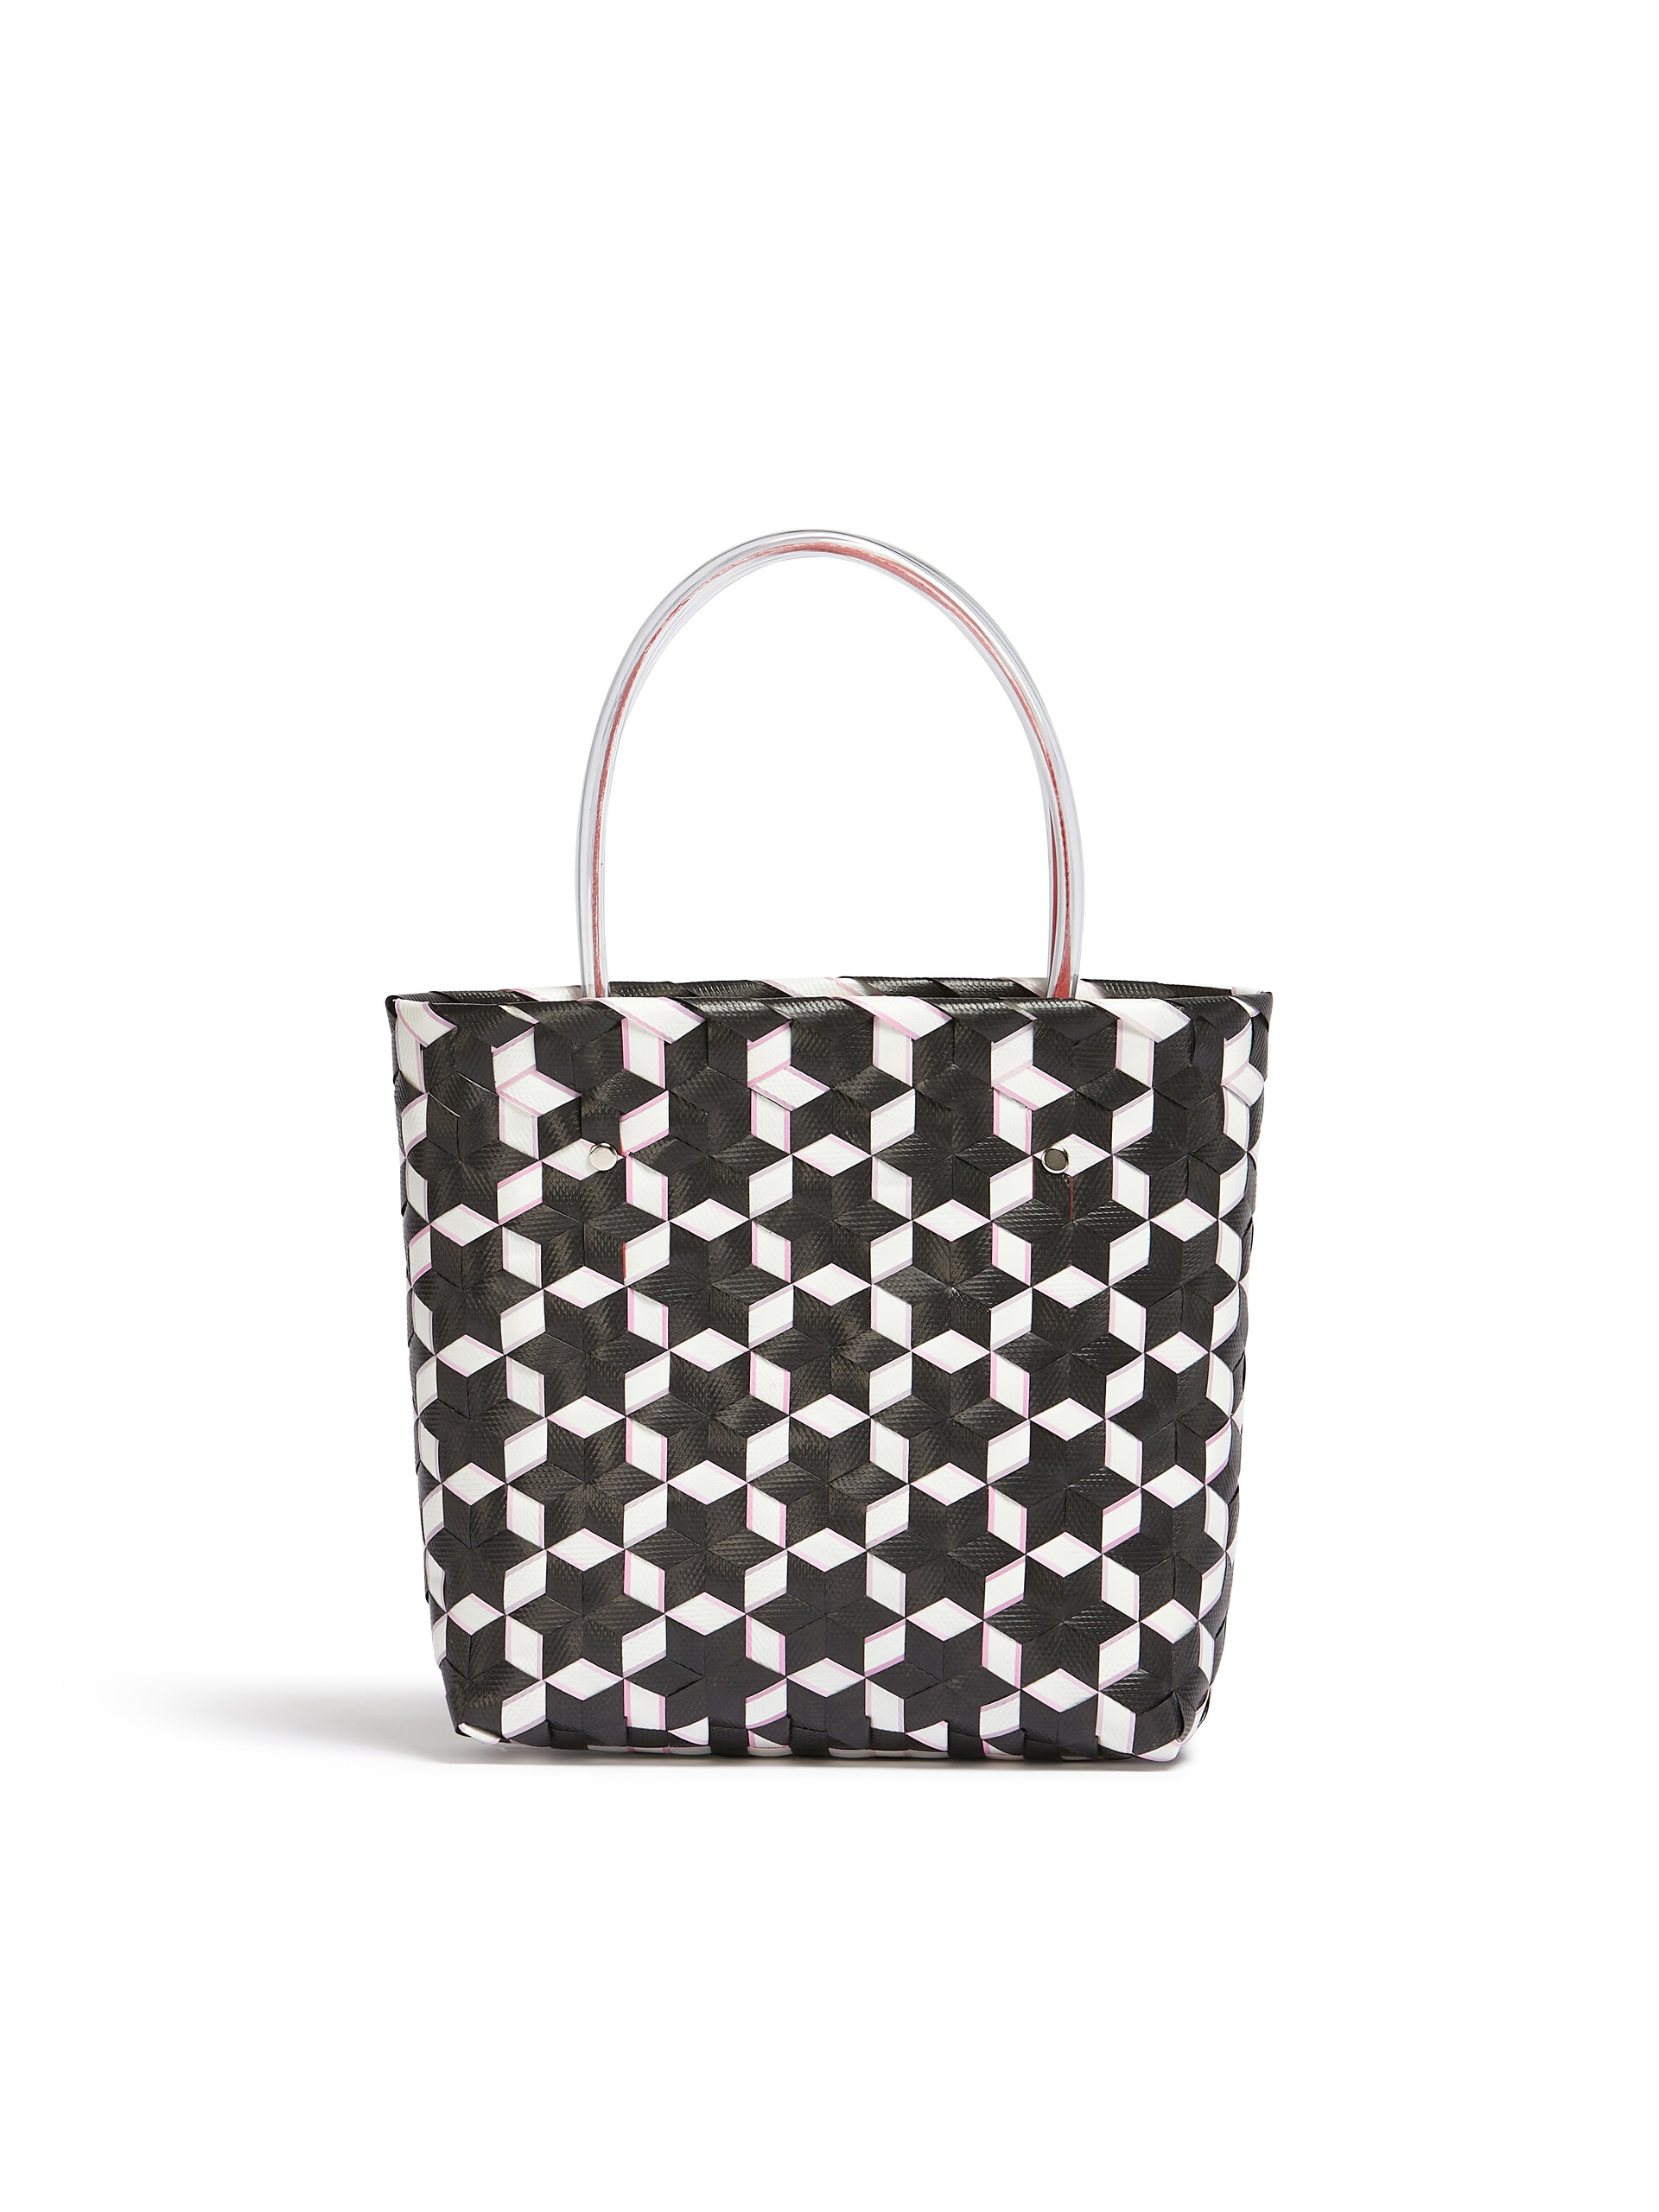 MARNI MARKET bag in black star woven material - Bags - Image 3